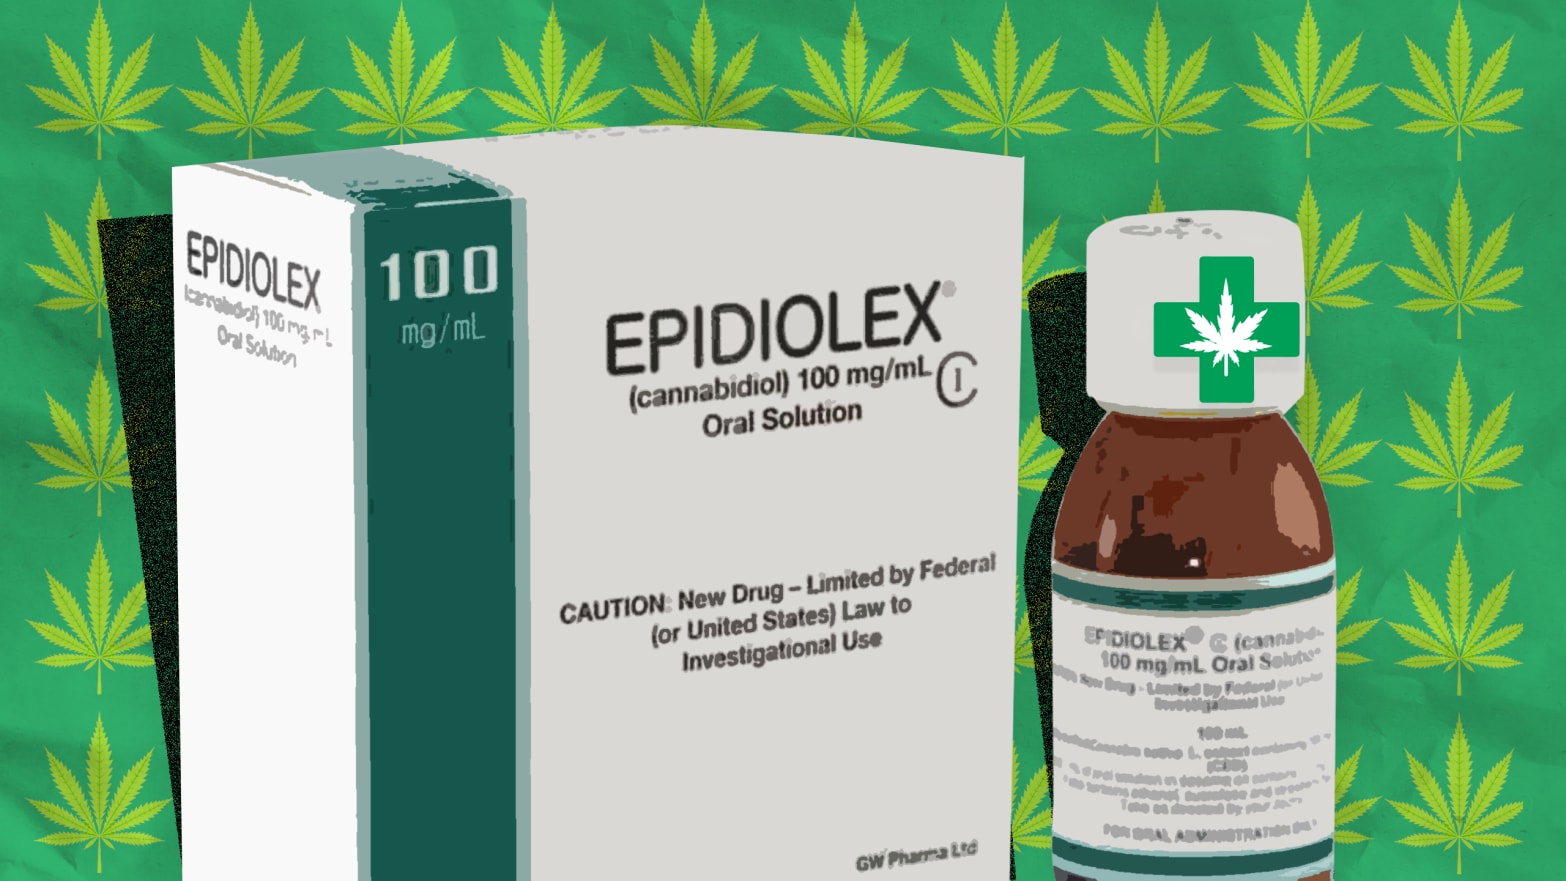 epidiolex marijuana cbd gw pharmaceuticals green weed pot leaves fda food and drug administration epilepsy Lennox Gastaut Dravet syndrome